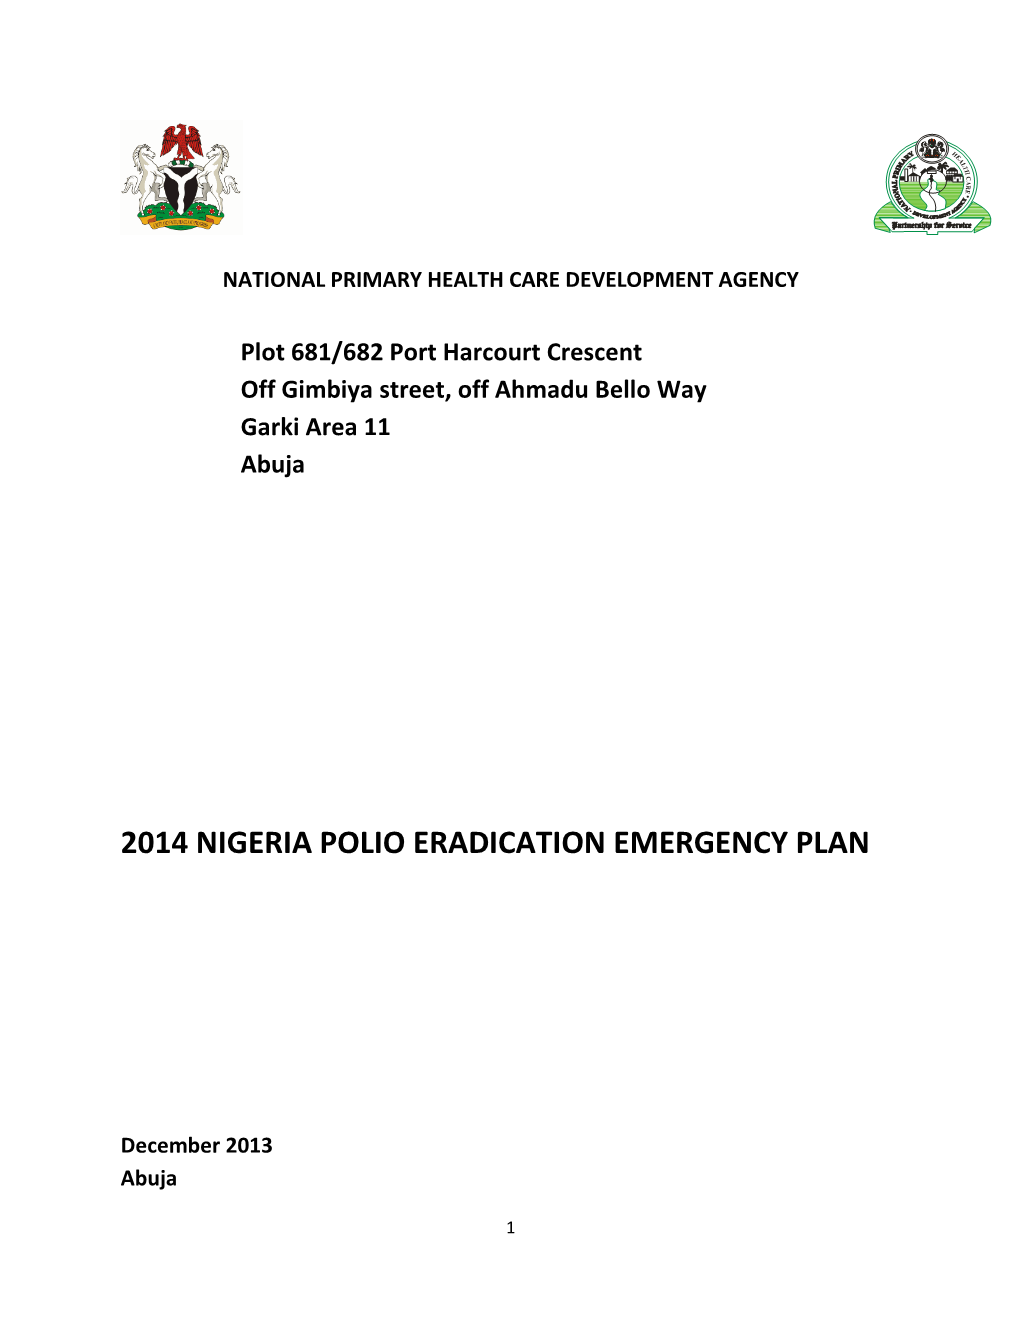 2014 Nigeria Polio Eradication Emergency Plan